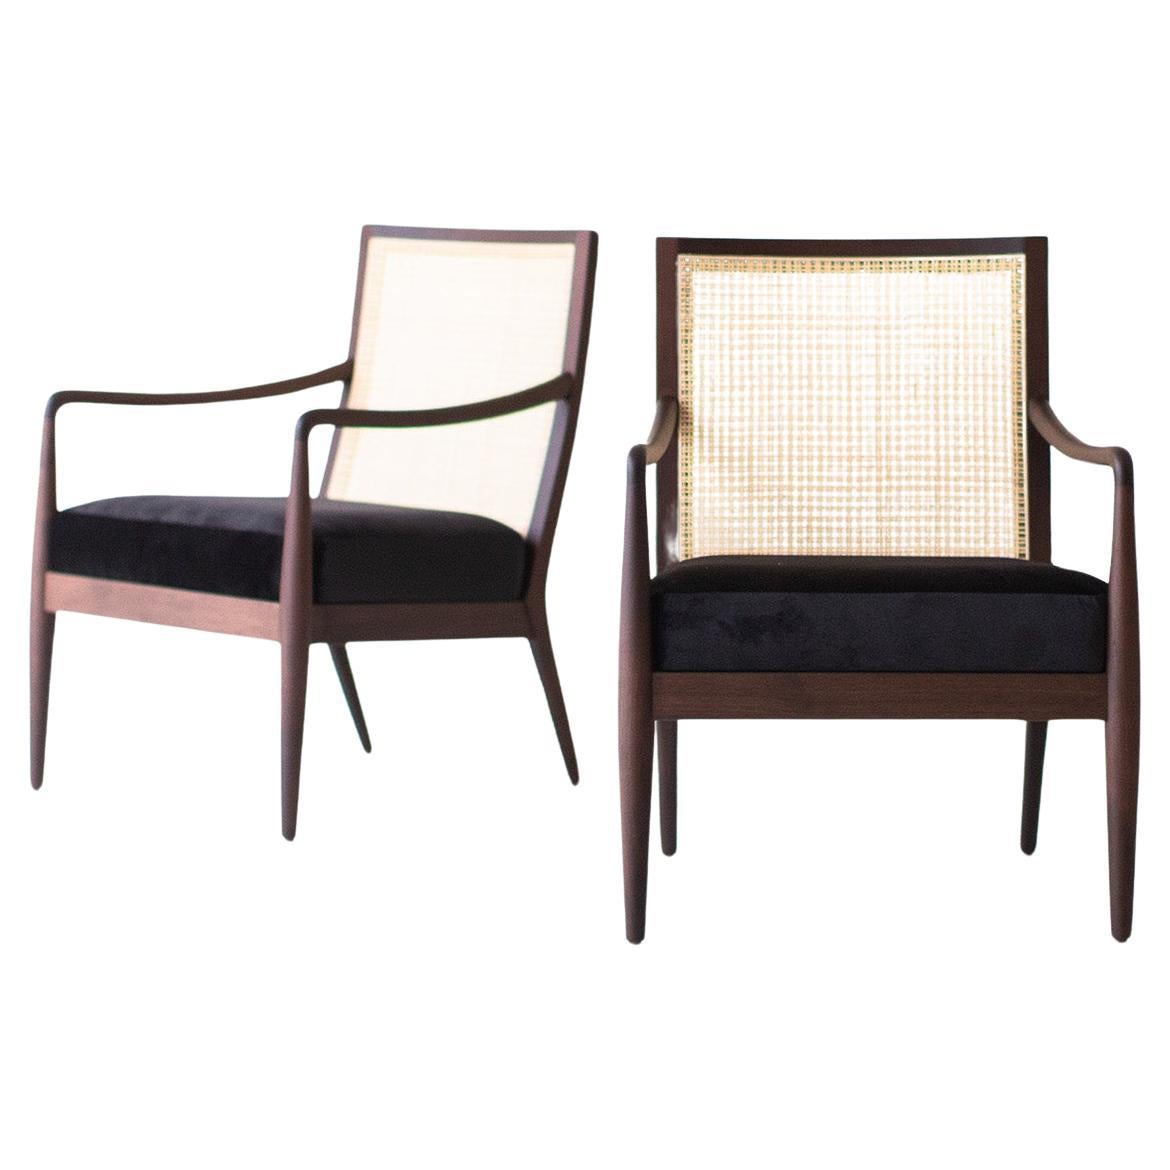 CraftAssociates Chairs, Peabody Modern Cane Back Chairs, Black, Walnut For Sale